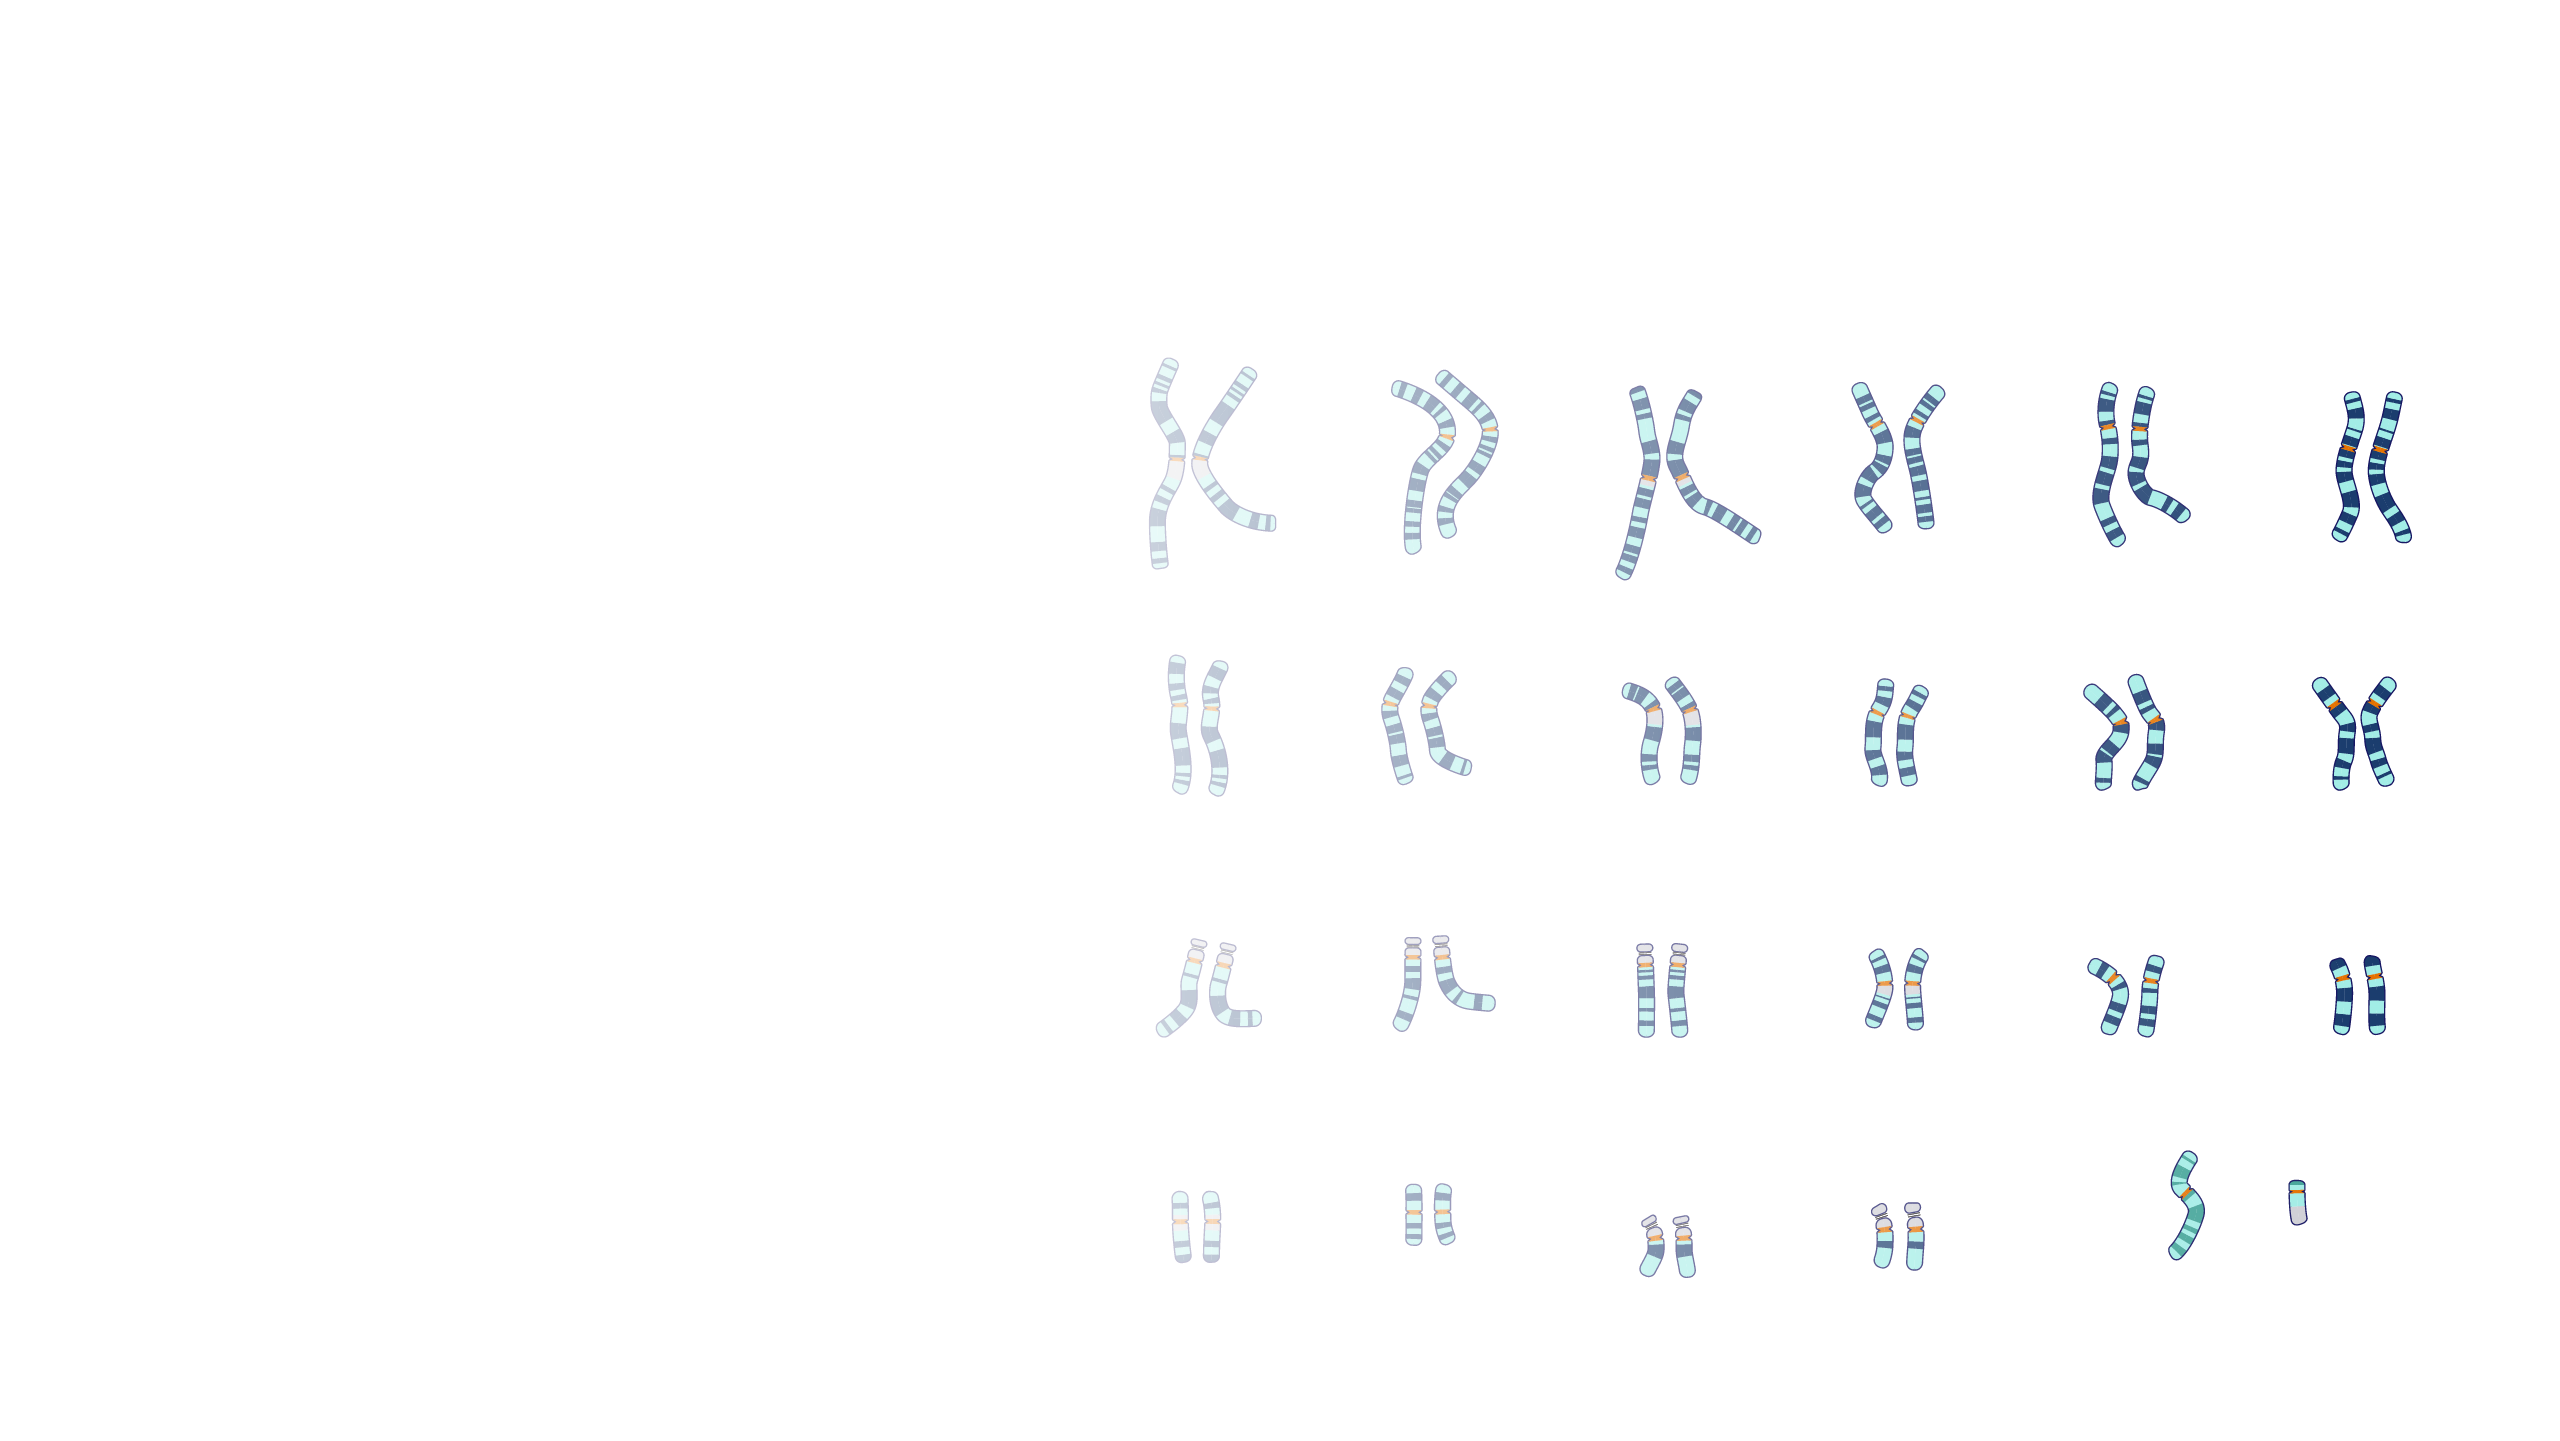 xy chromosome karyotype